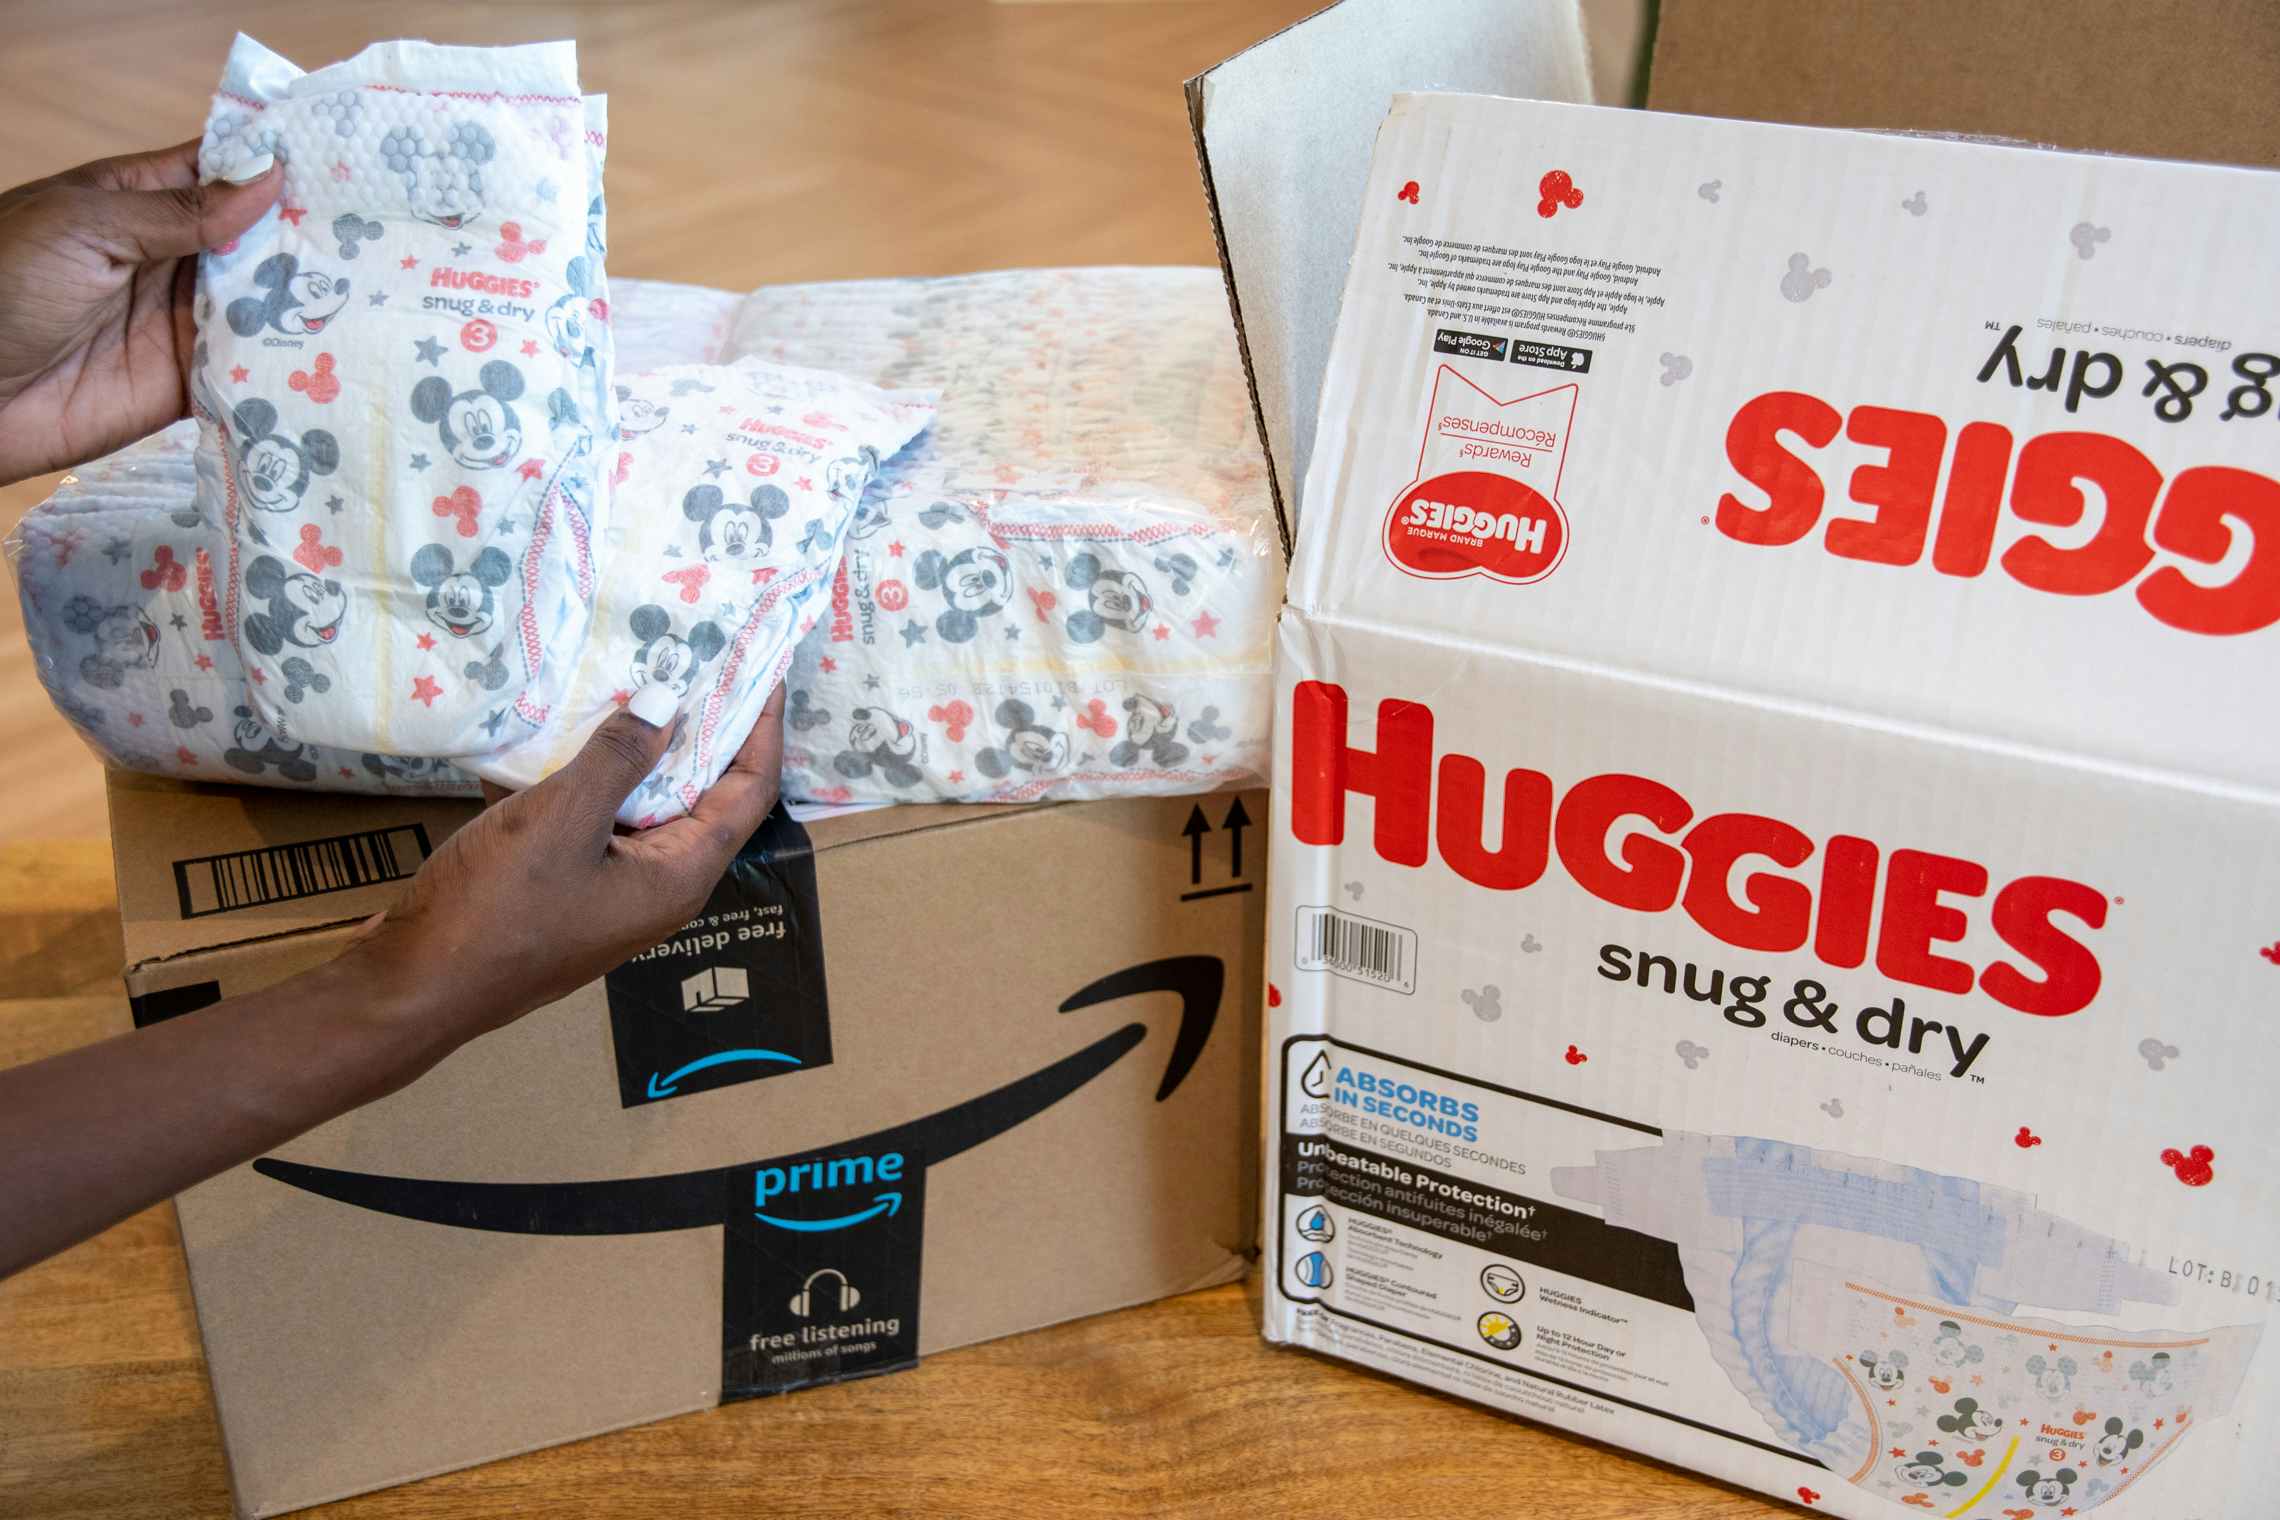 Huggies diapers next to an Amazon box.